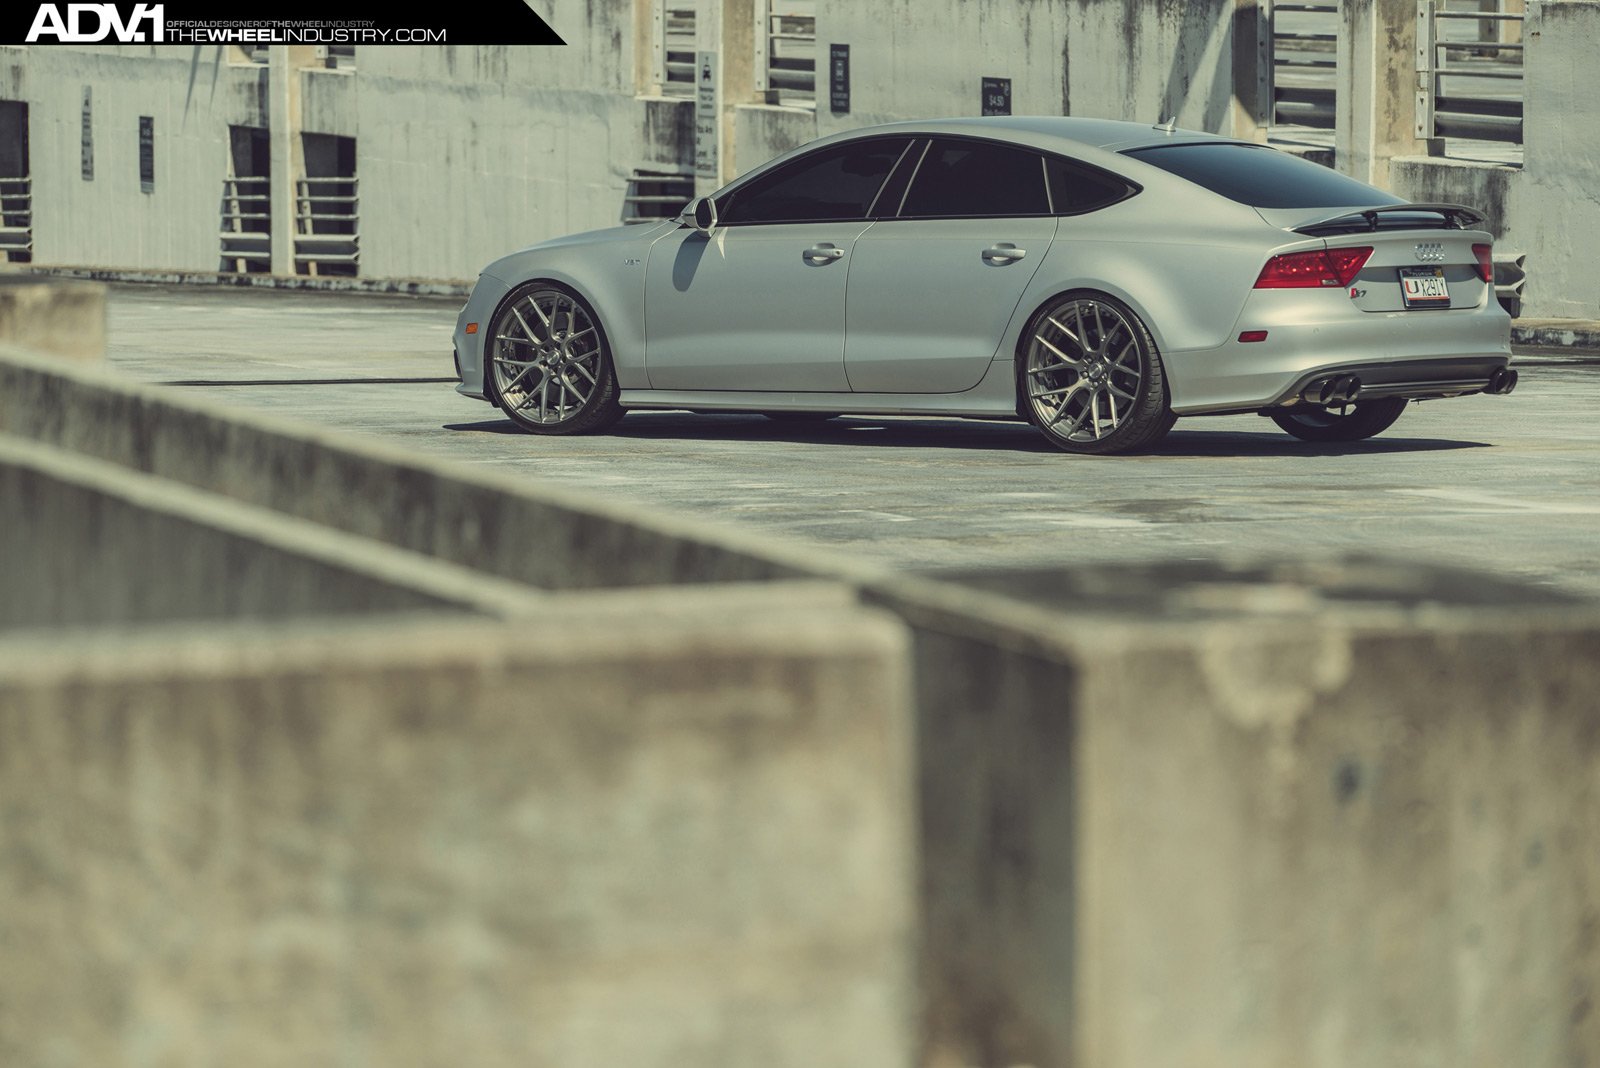 adv, 1, Wheels, Audi, S7, Tuning, Cars, 2015 Wallpaper